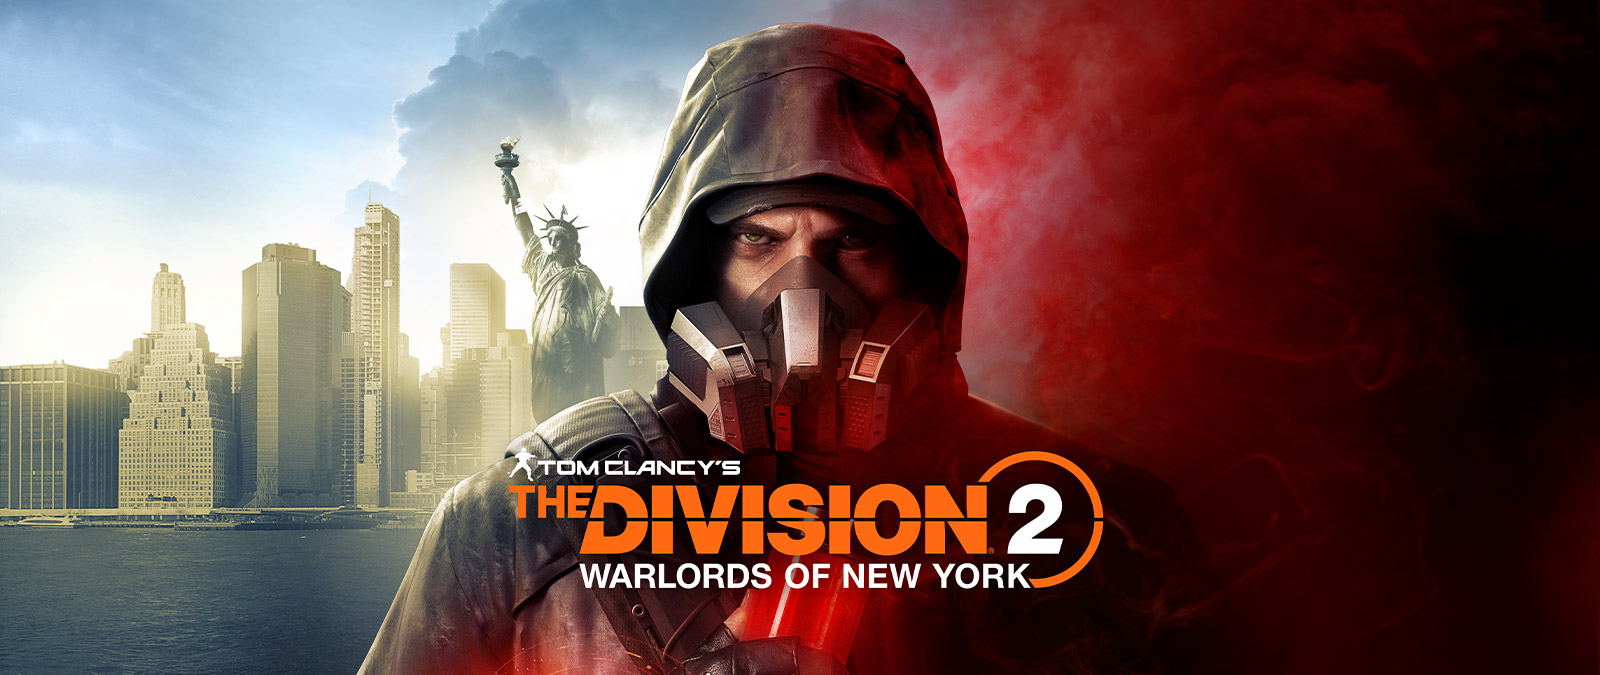 Tom Clancy's The Division 2, Warlords of New York, ο Aaron Keener φορά αντιασφυξιογόνο μάσκα και στέκεται μπροστά στο Άγαλμα της Ελευθερίας